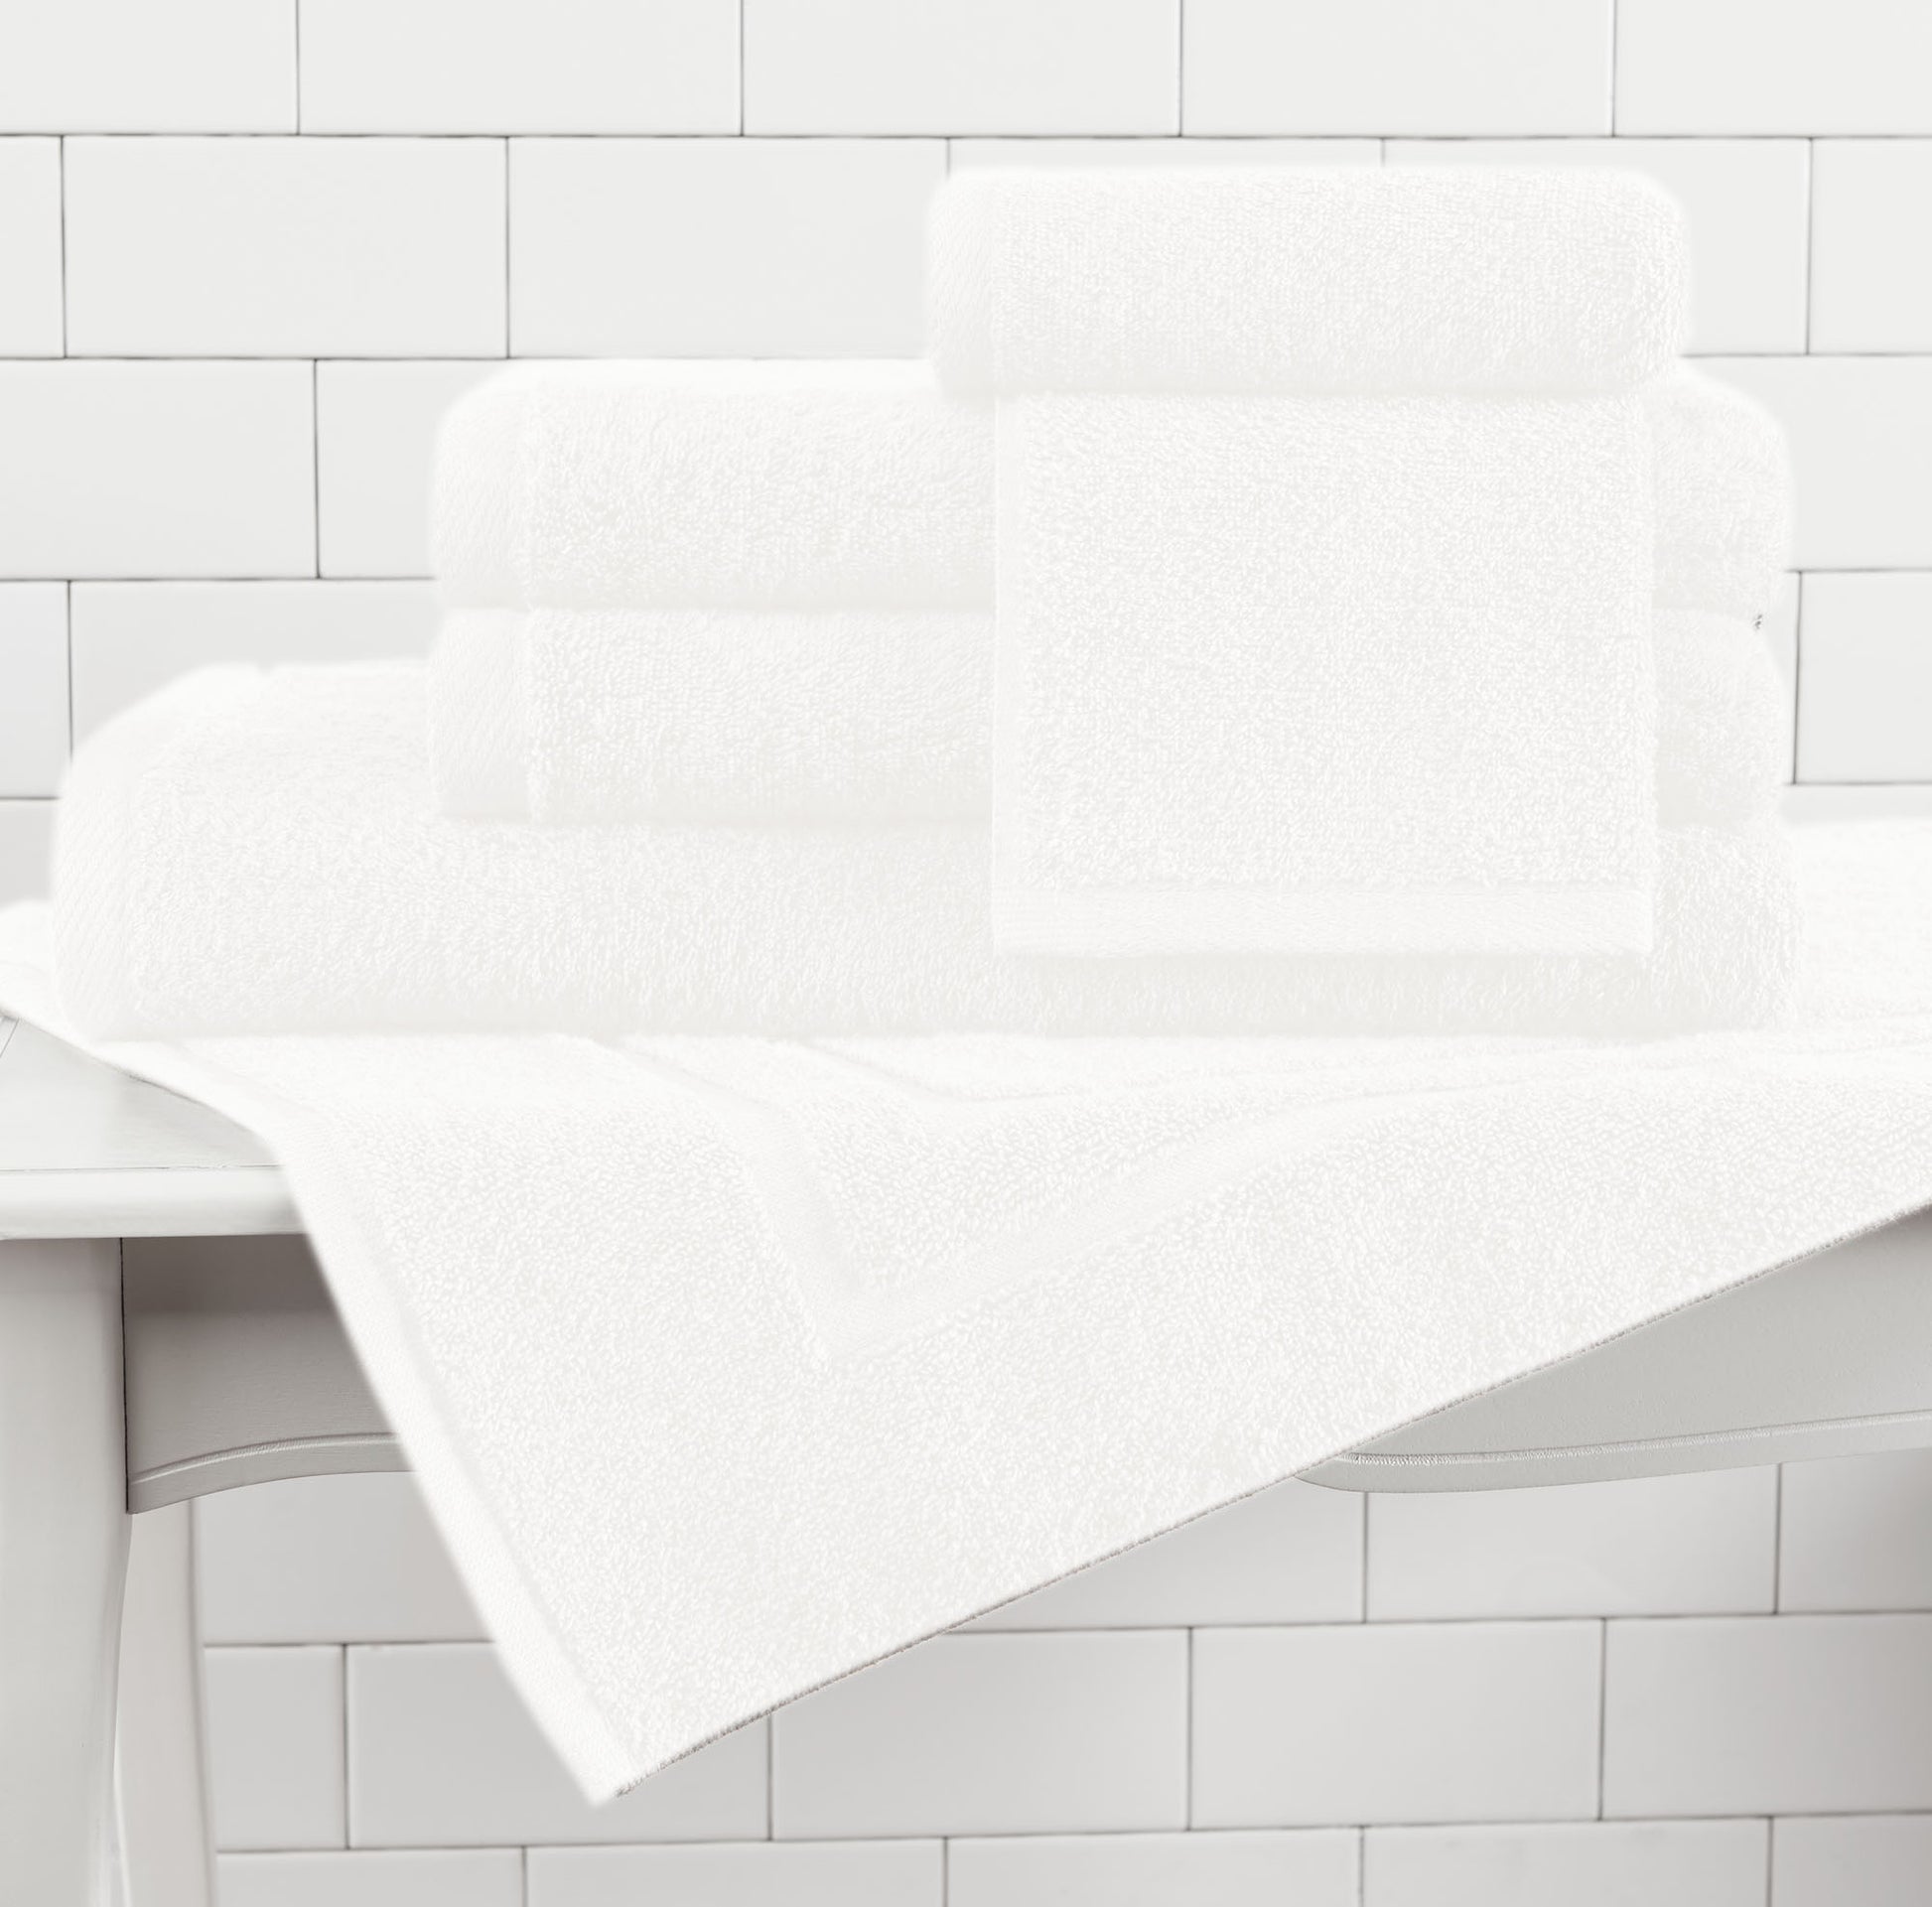 Towels Beyond Luxury 6 Piece Towel Set - 100% USA Cotton, Very